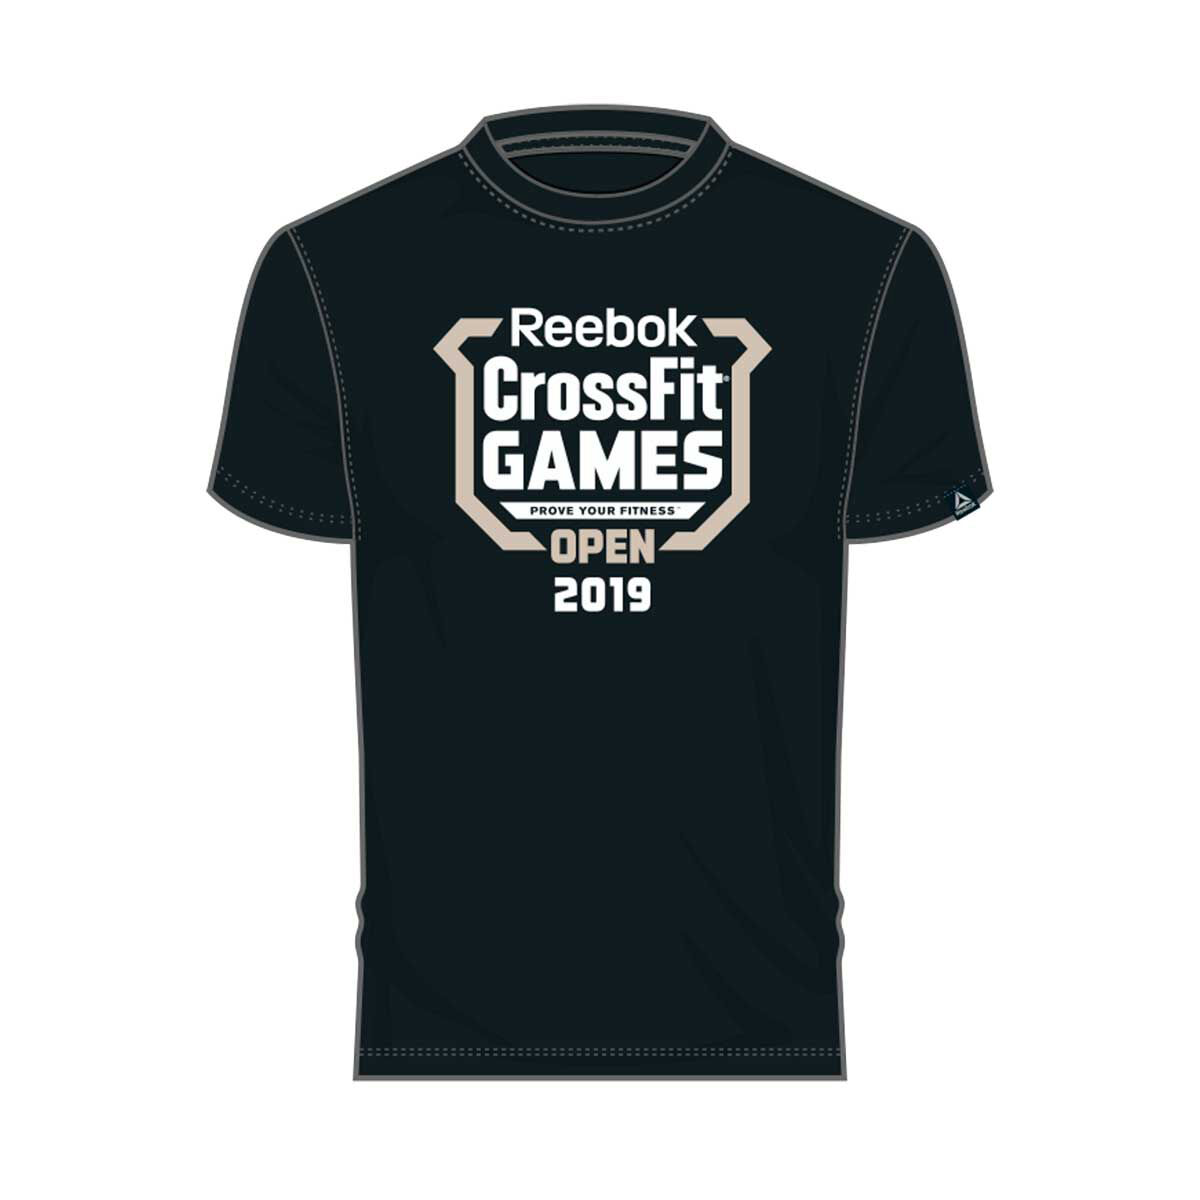 reebok crossfit games 2019 t shirt